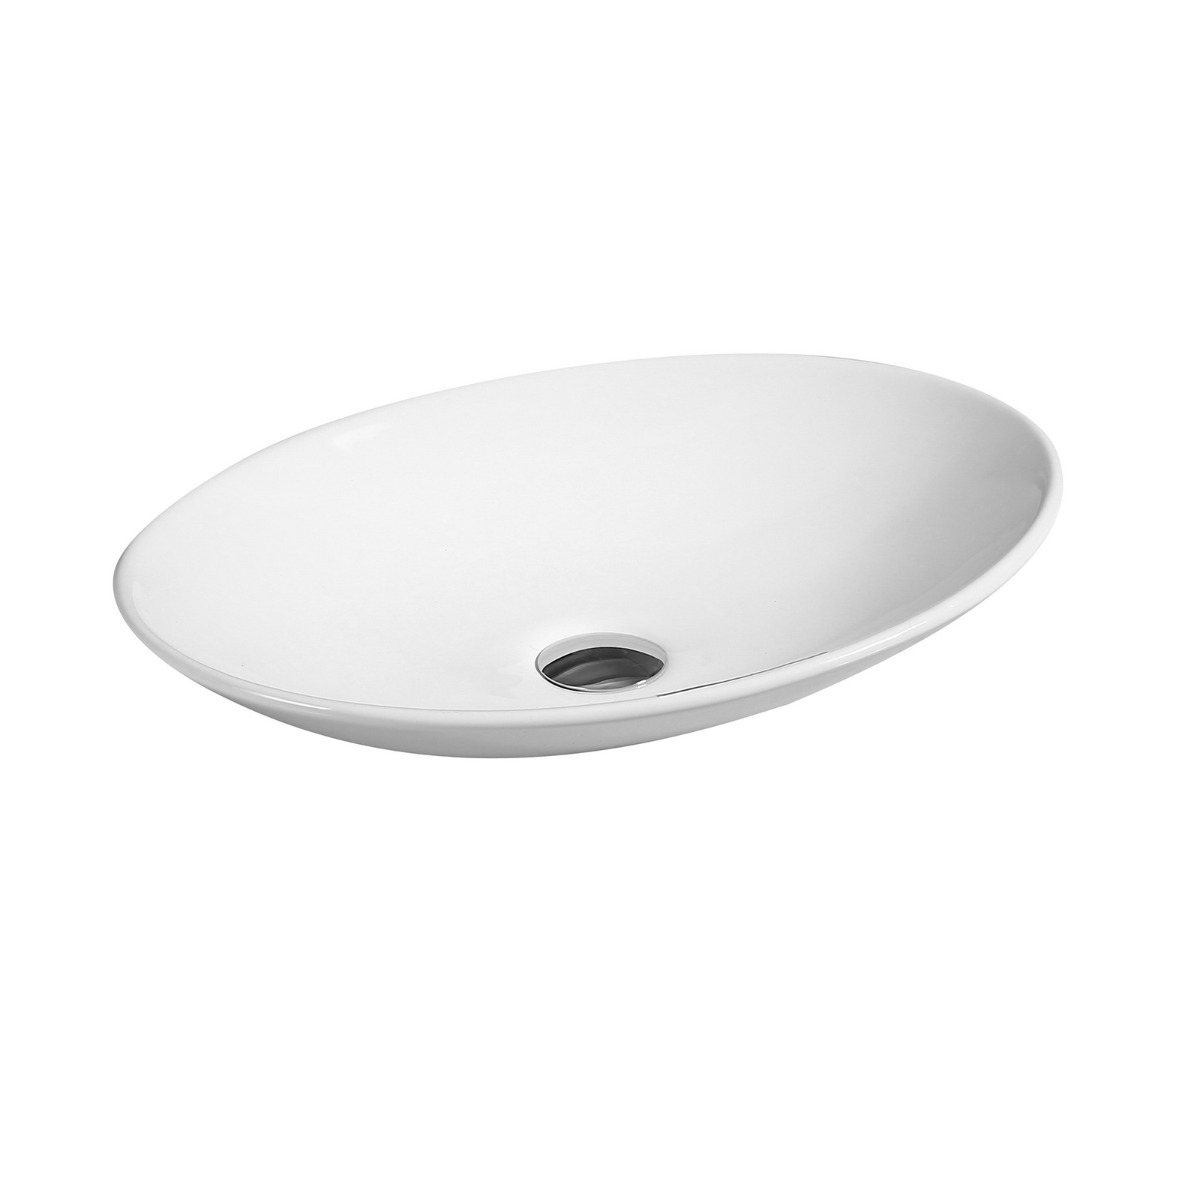 7526 Ceramic Oval Countertop Basin 